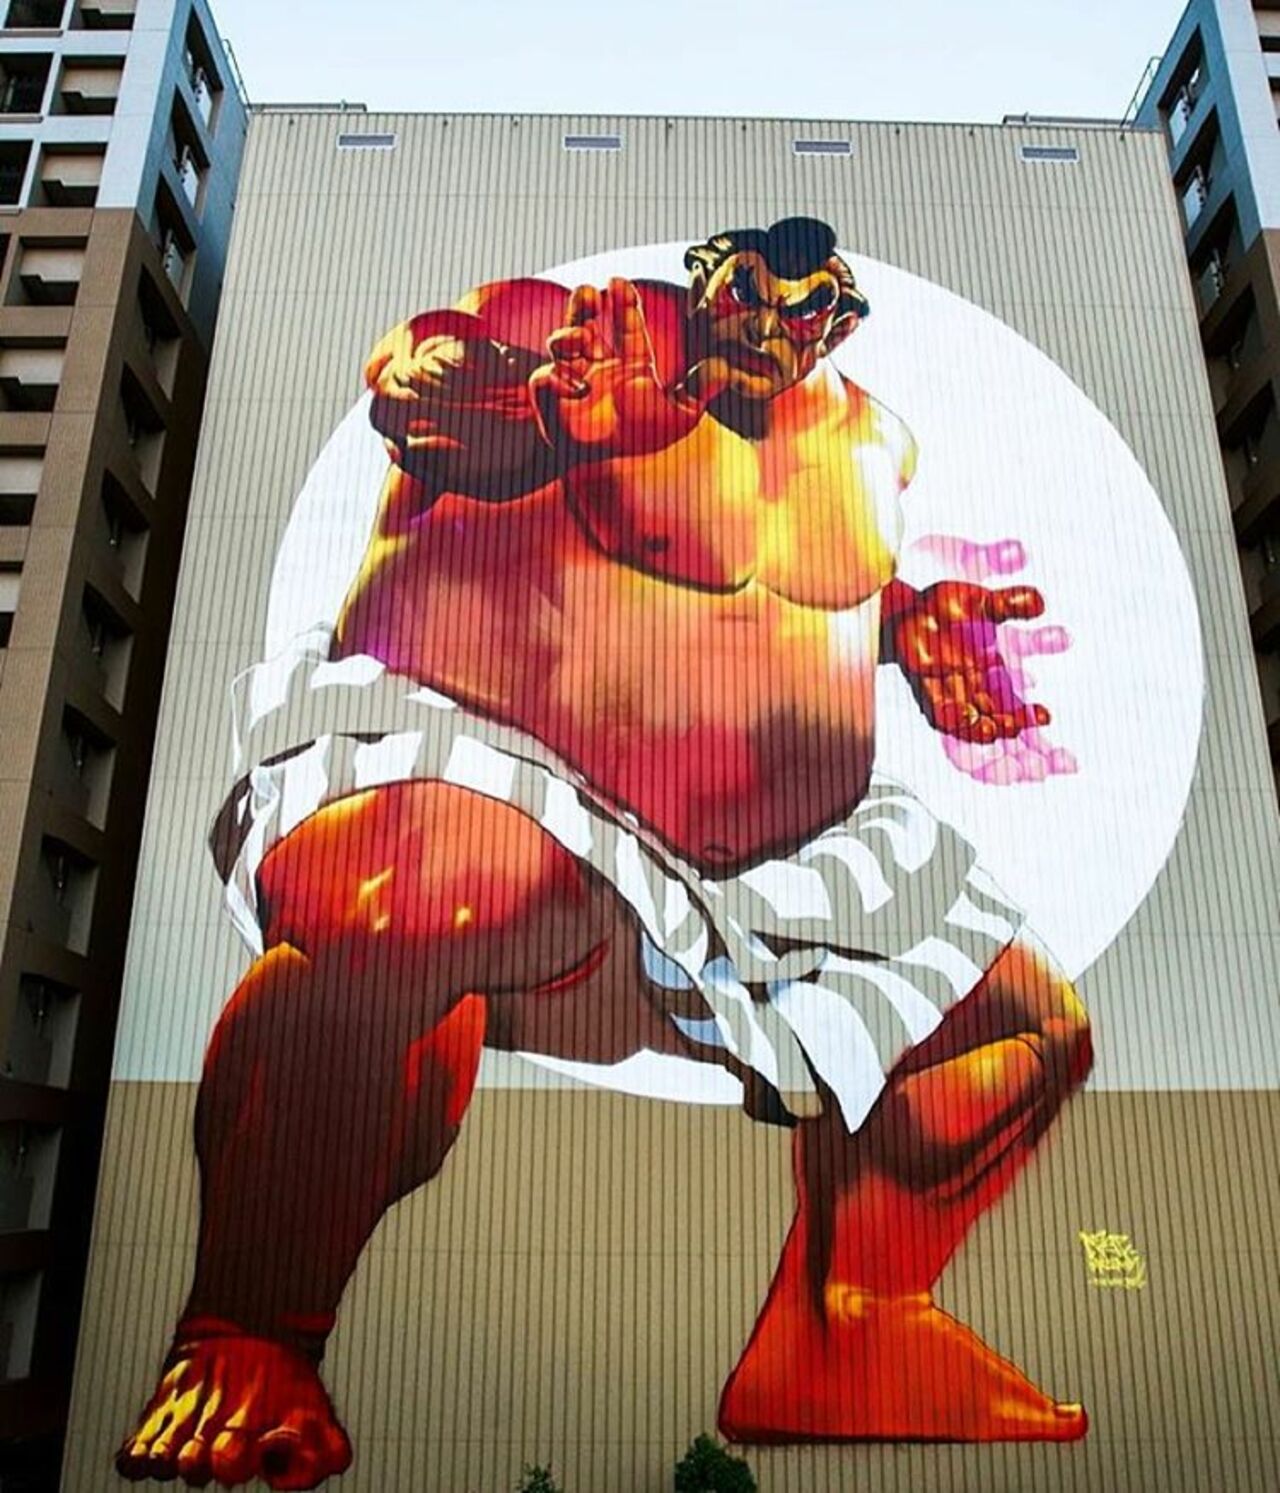 http://E.Honda! a new mural from Case Ma'Claim in Tokyo, Japan for Pow! Wow! #StreetArt #Graffiti #Mural https://t.co/frzR6tQg1j